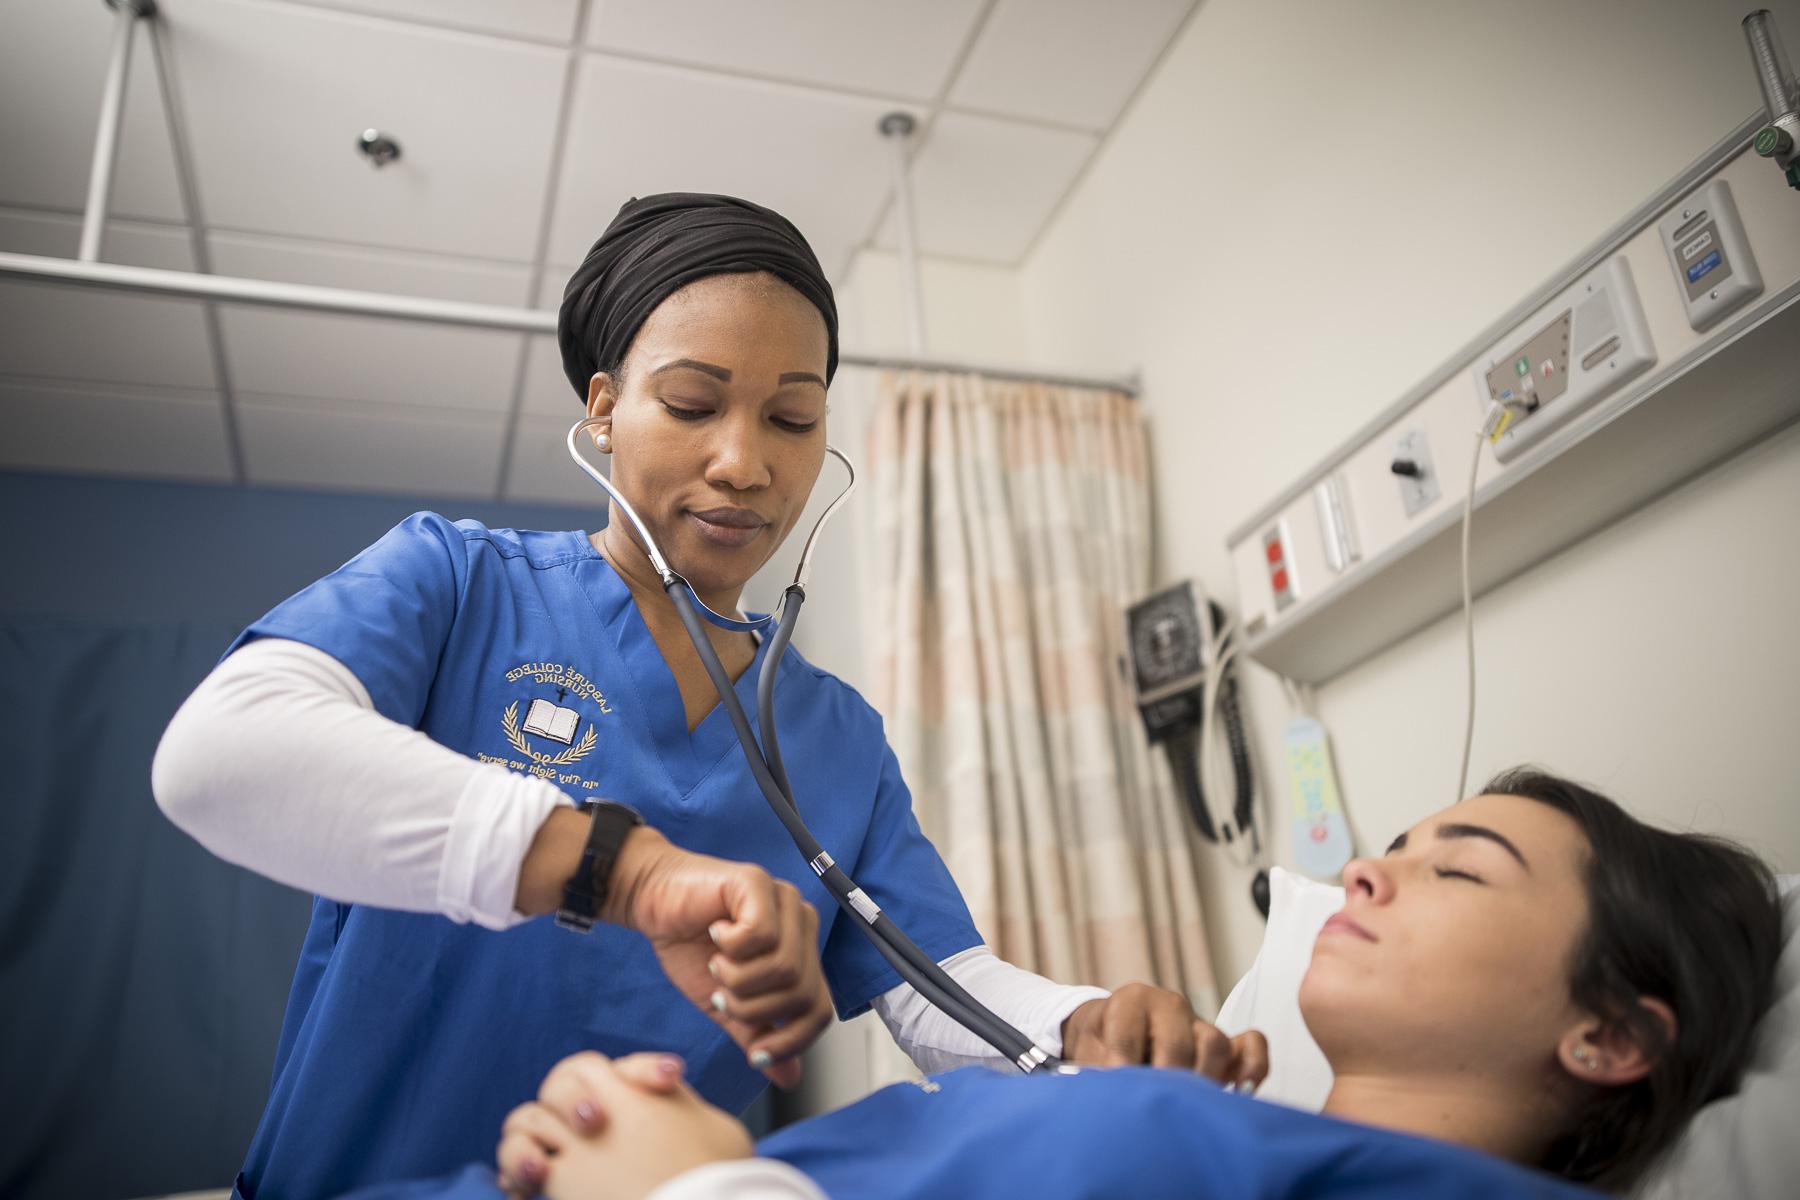 Student nurse with stethoscope taking vitals